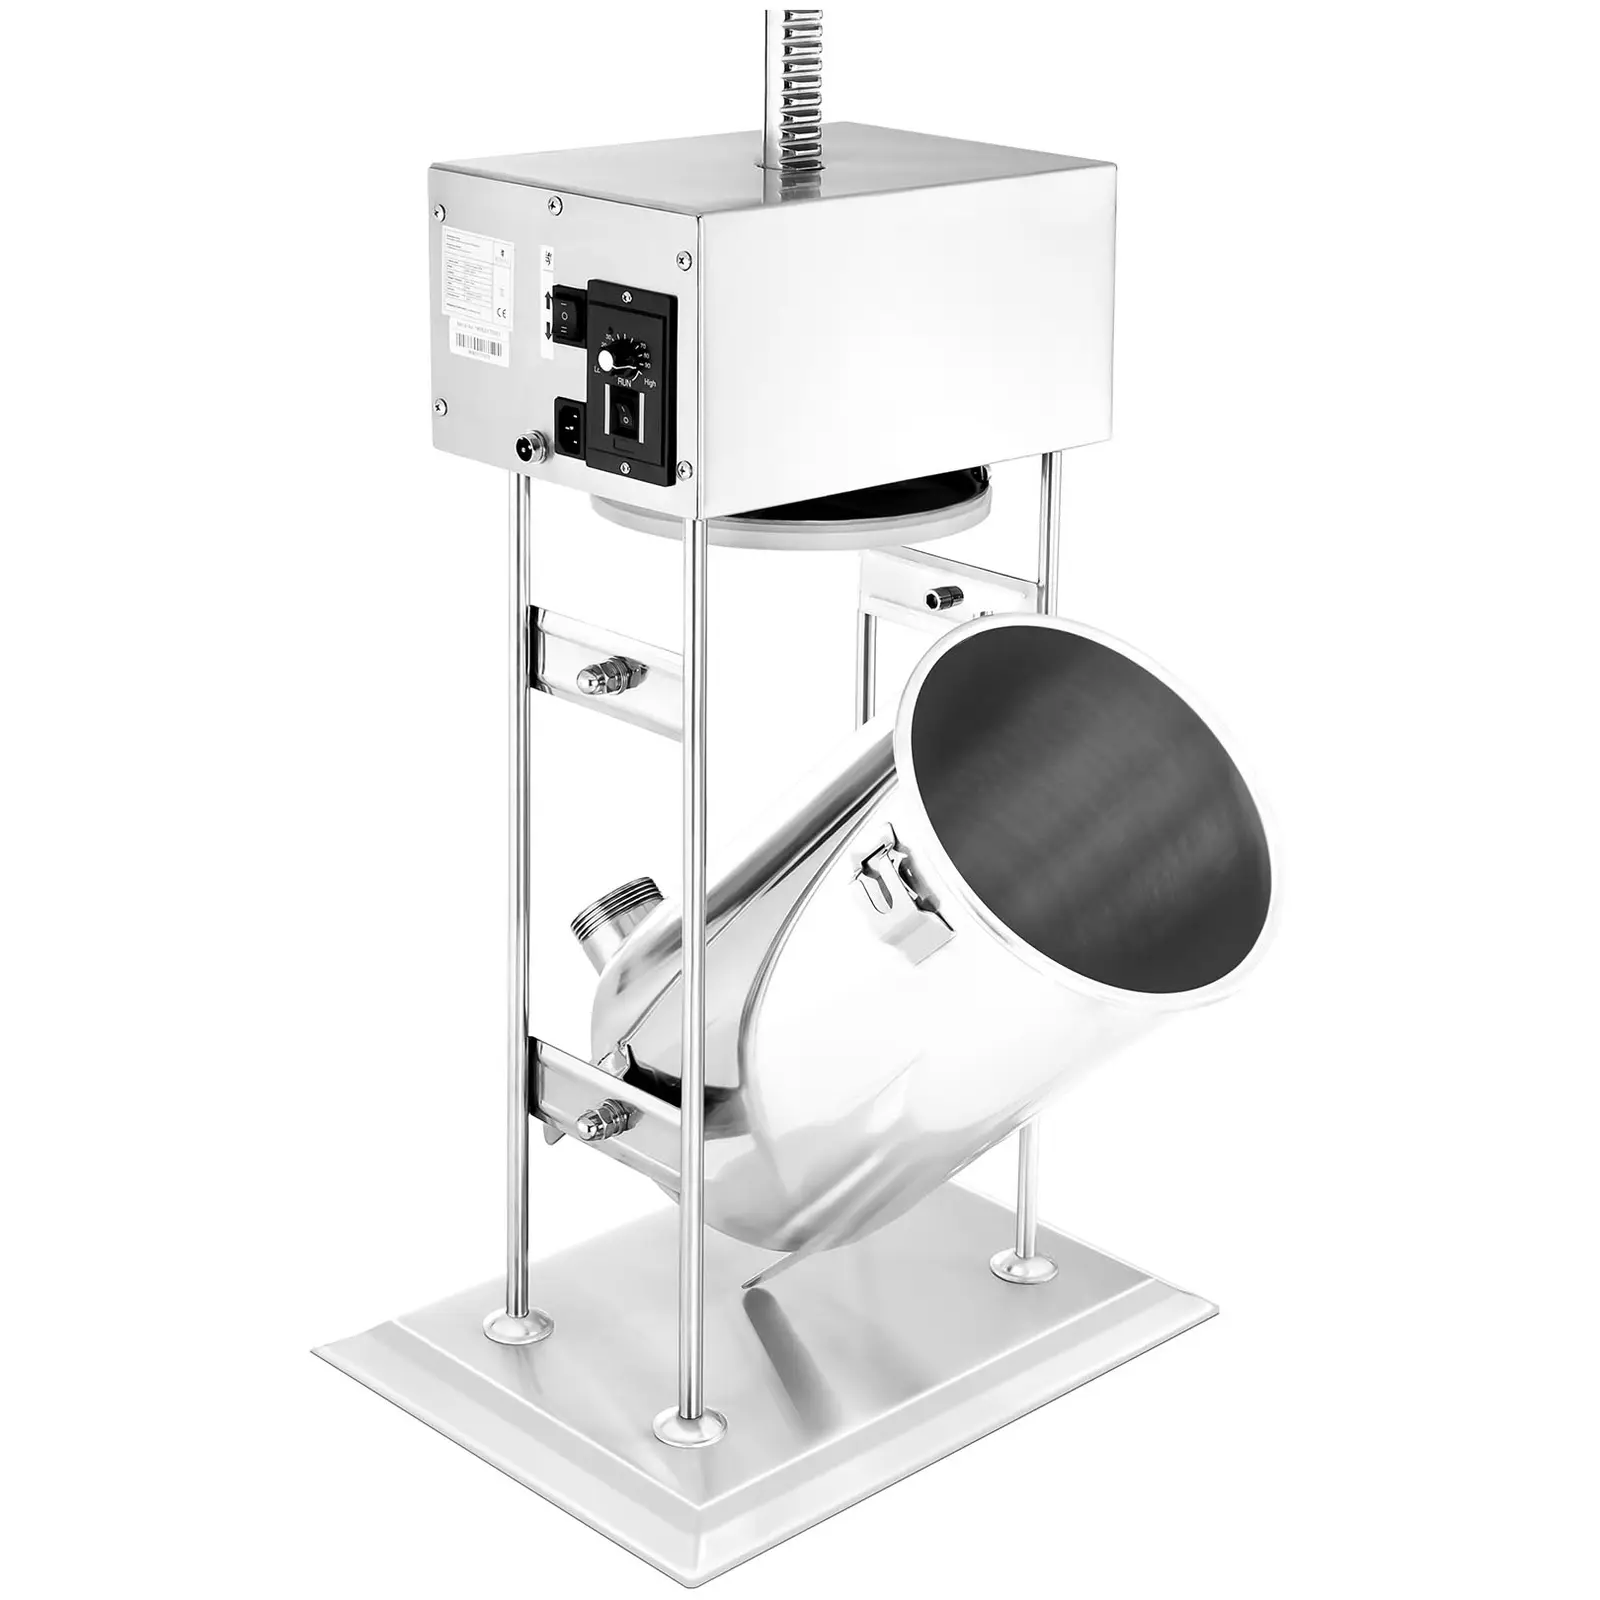 Električni pekač klobas – 10 l - električni